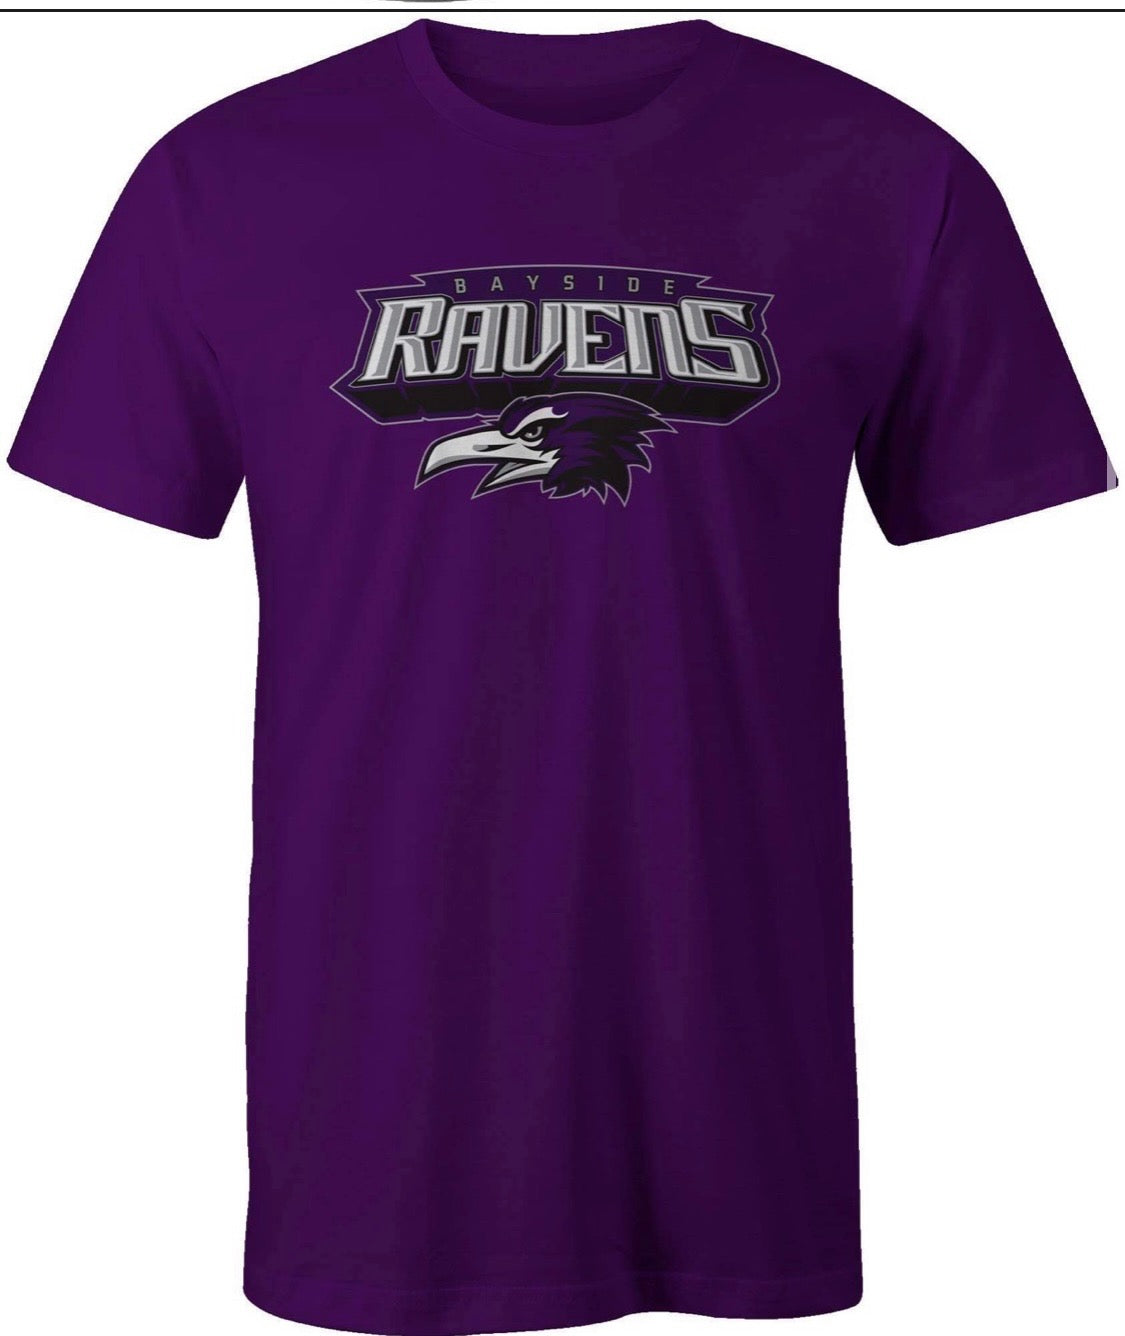 Bayside Ravens Gridiron Team